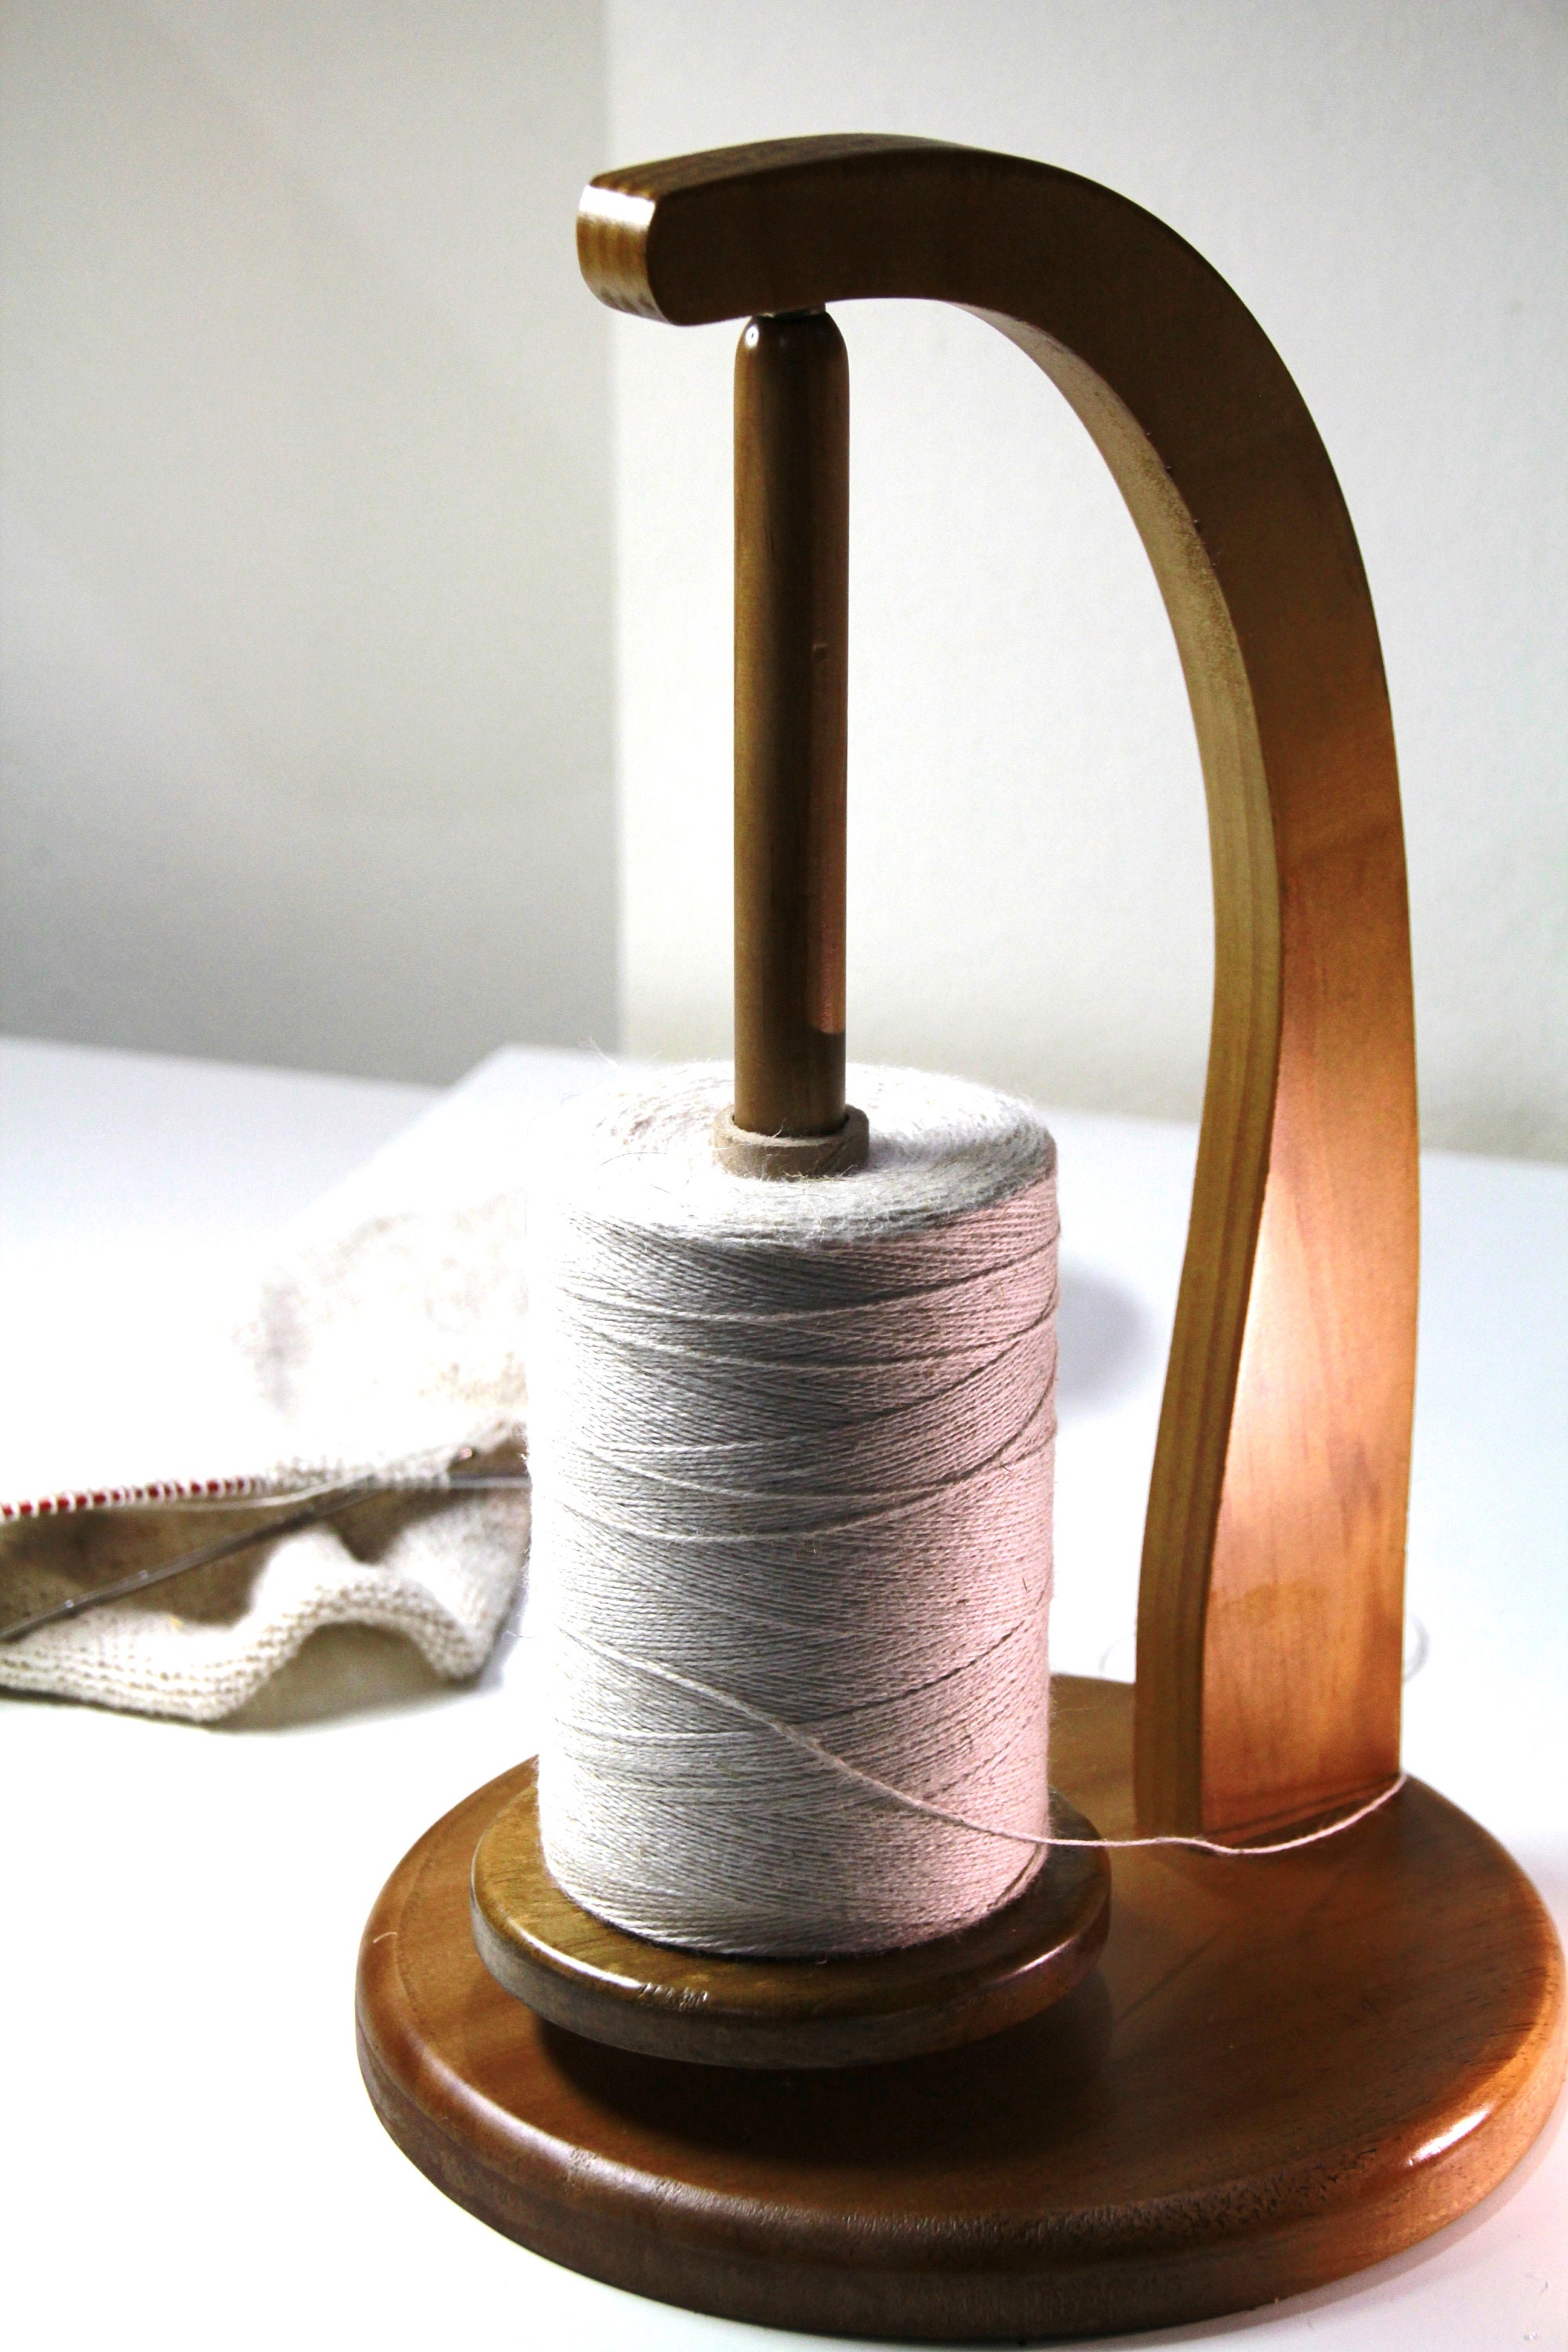  Wool Jeanie 磁性鐘擺紗針織和鉤針編織紗線餵食器: 藝術